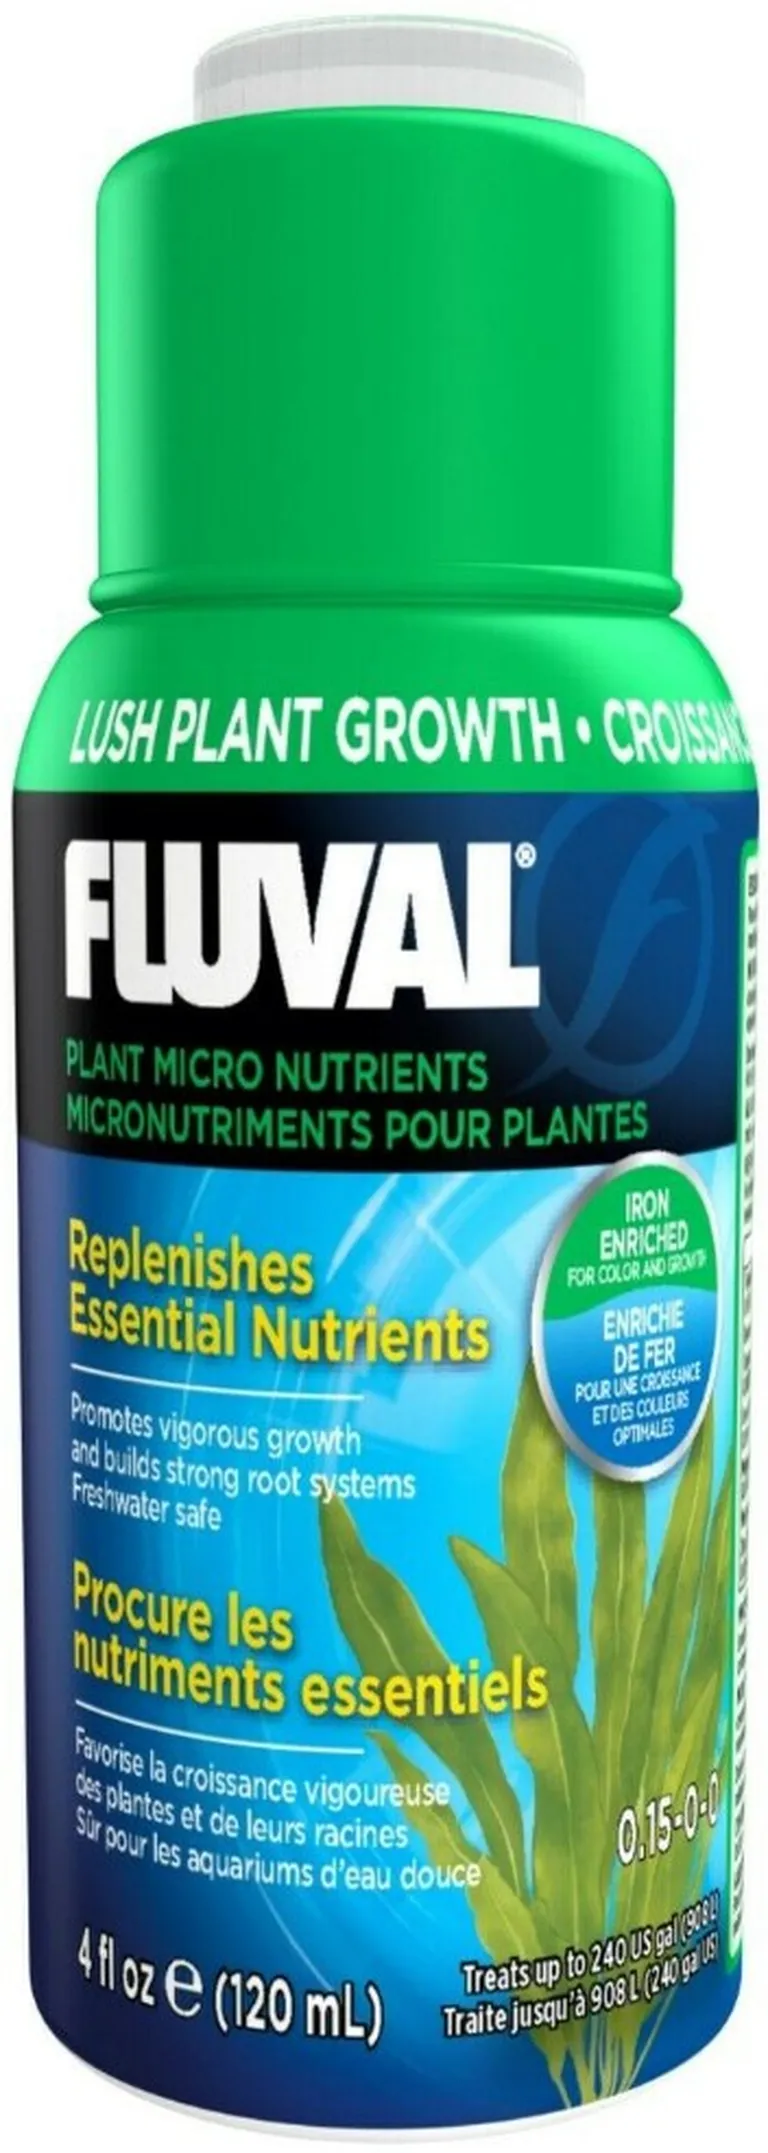 Fluval Plant Micro Nutrients Plant Care Photo 1